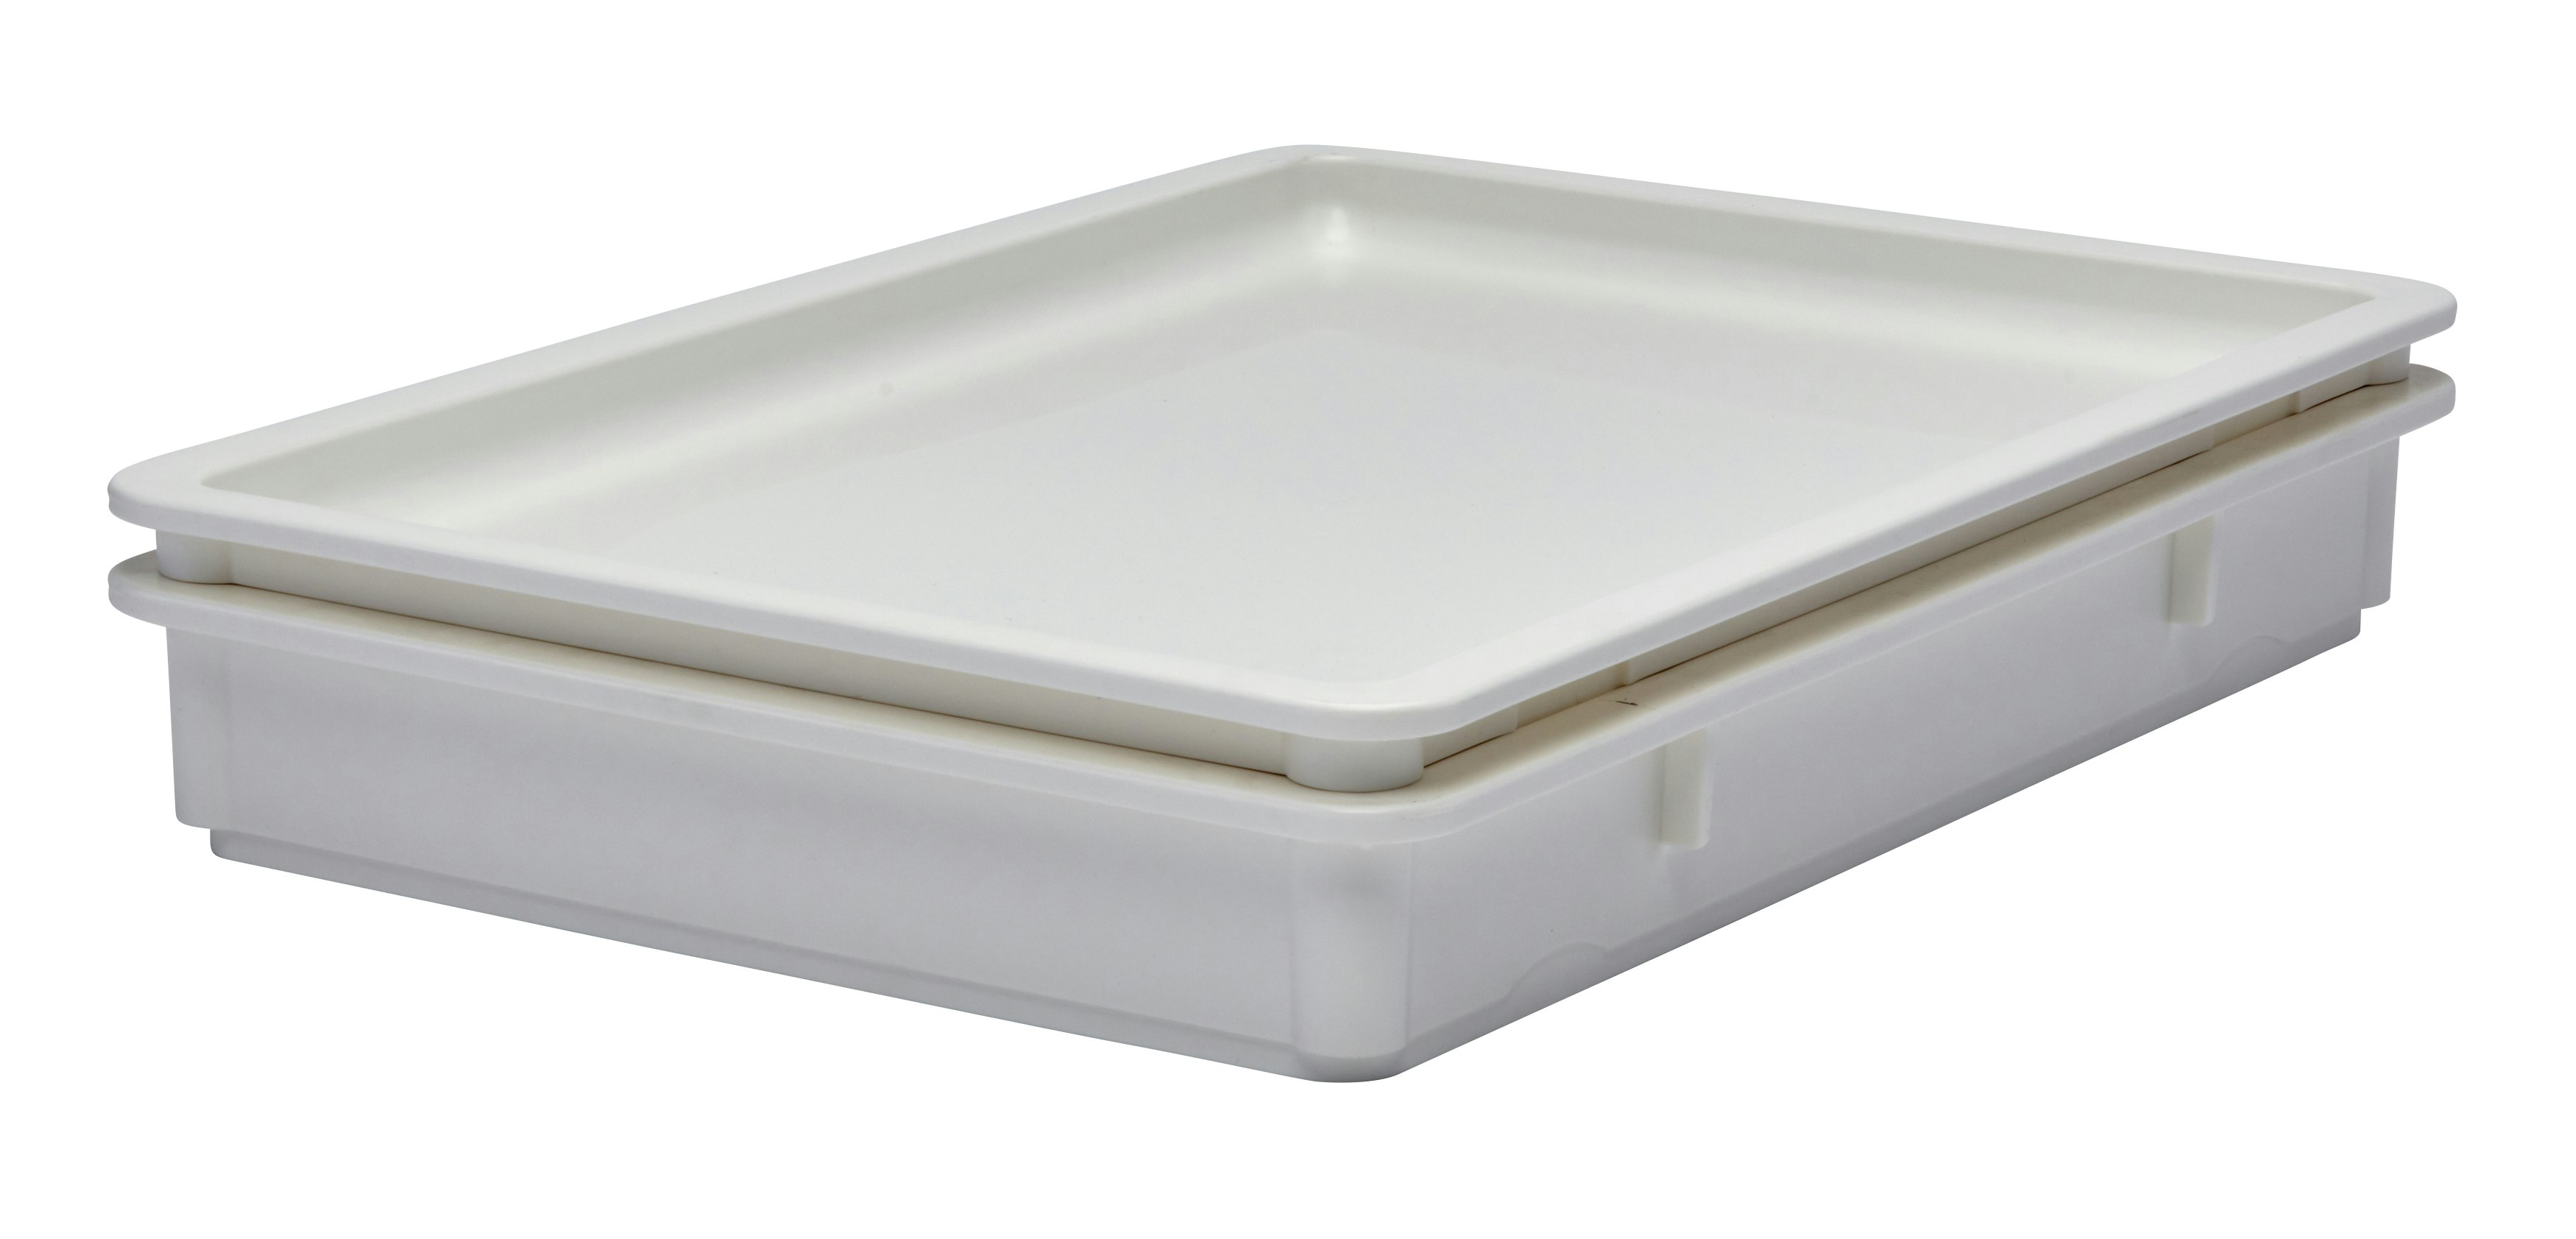 Choice 26 x 18 x 9 White Plastic Food Storage Box